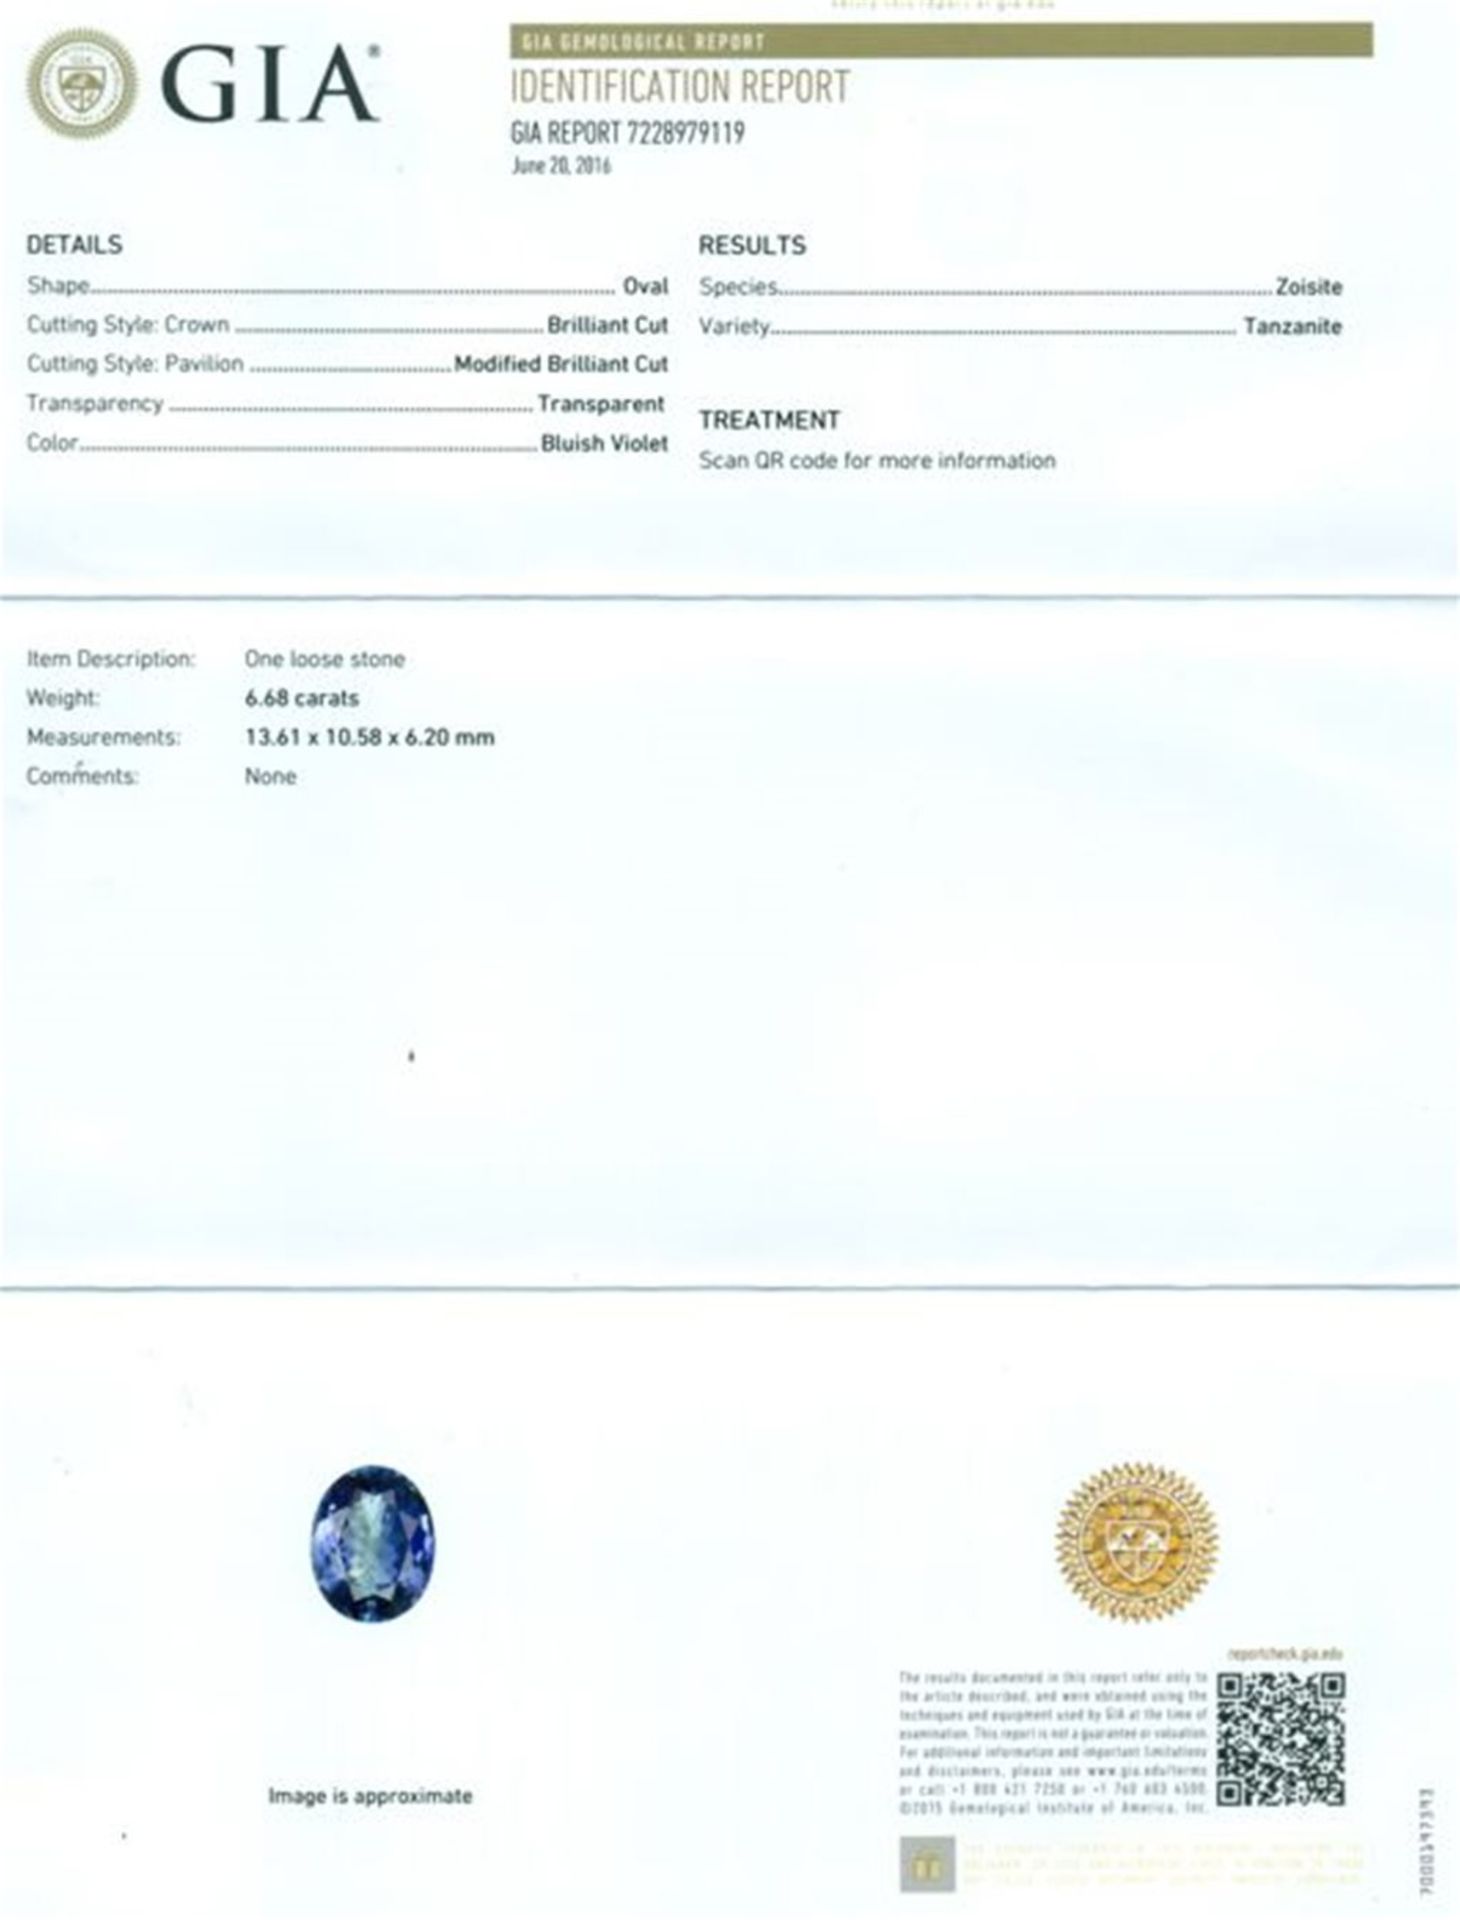 GIA Certified 6.68 ct. Tanzanite - Image 2 of 6